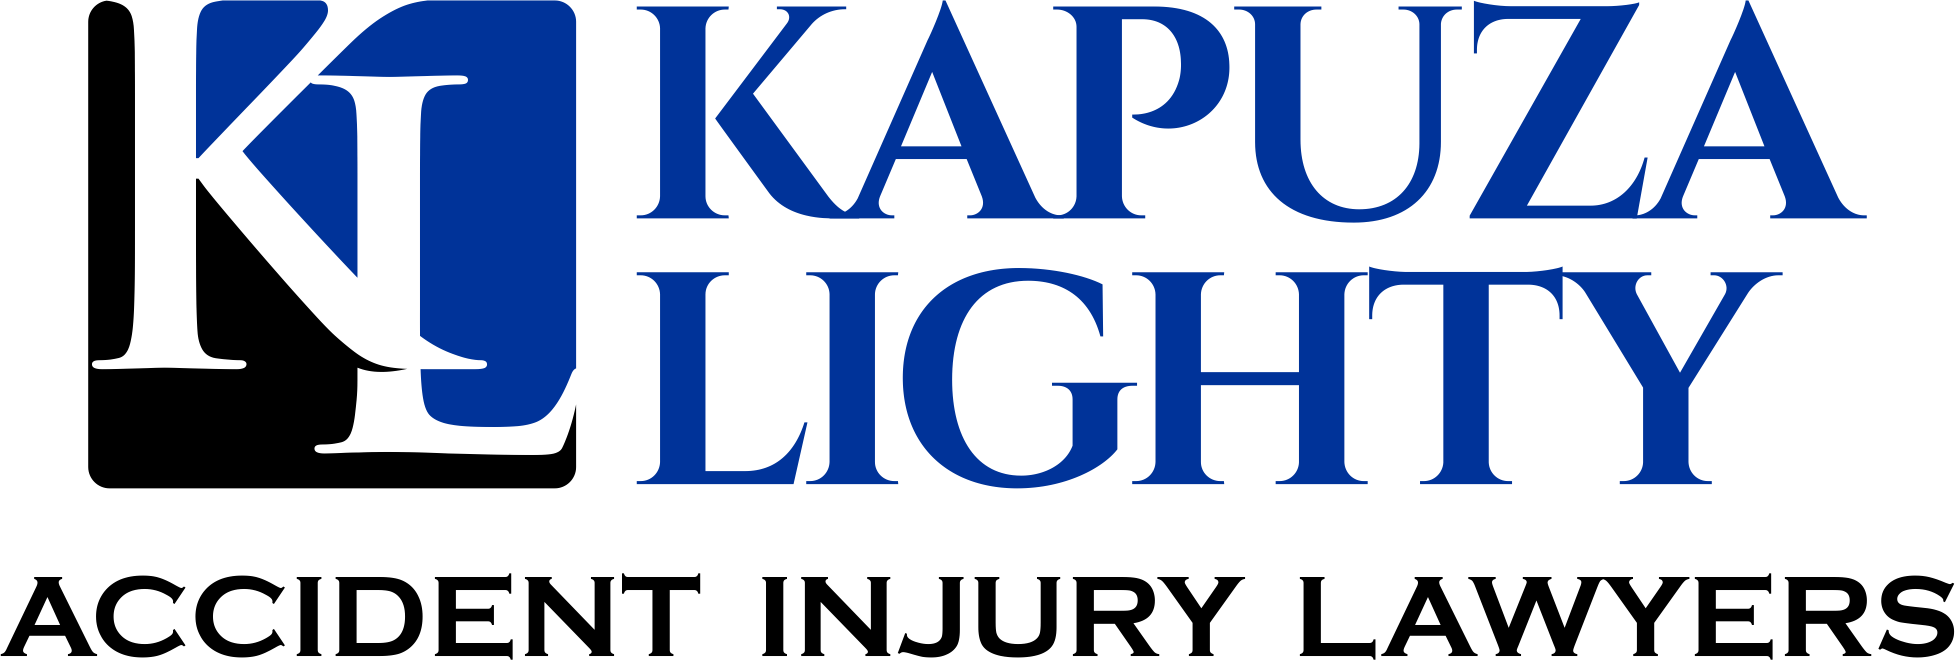 Kapuza Lighty, PLLC - Yakima Accident Injury Lawyers Logo